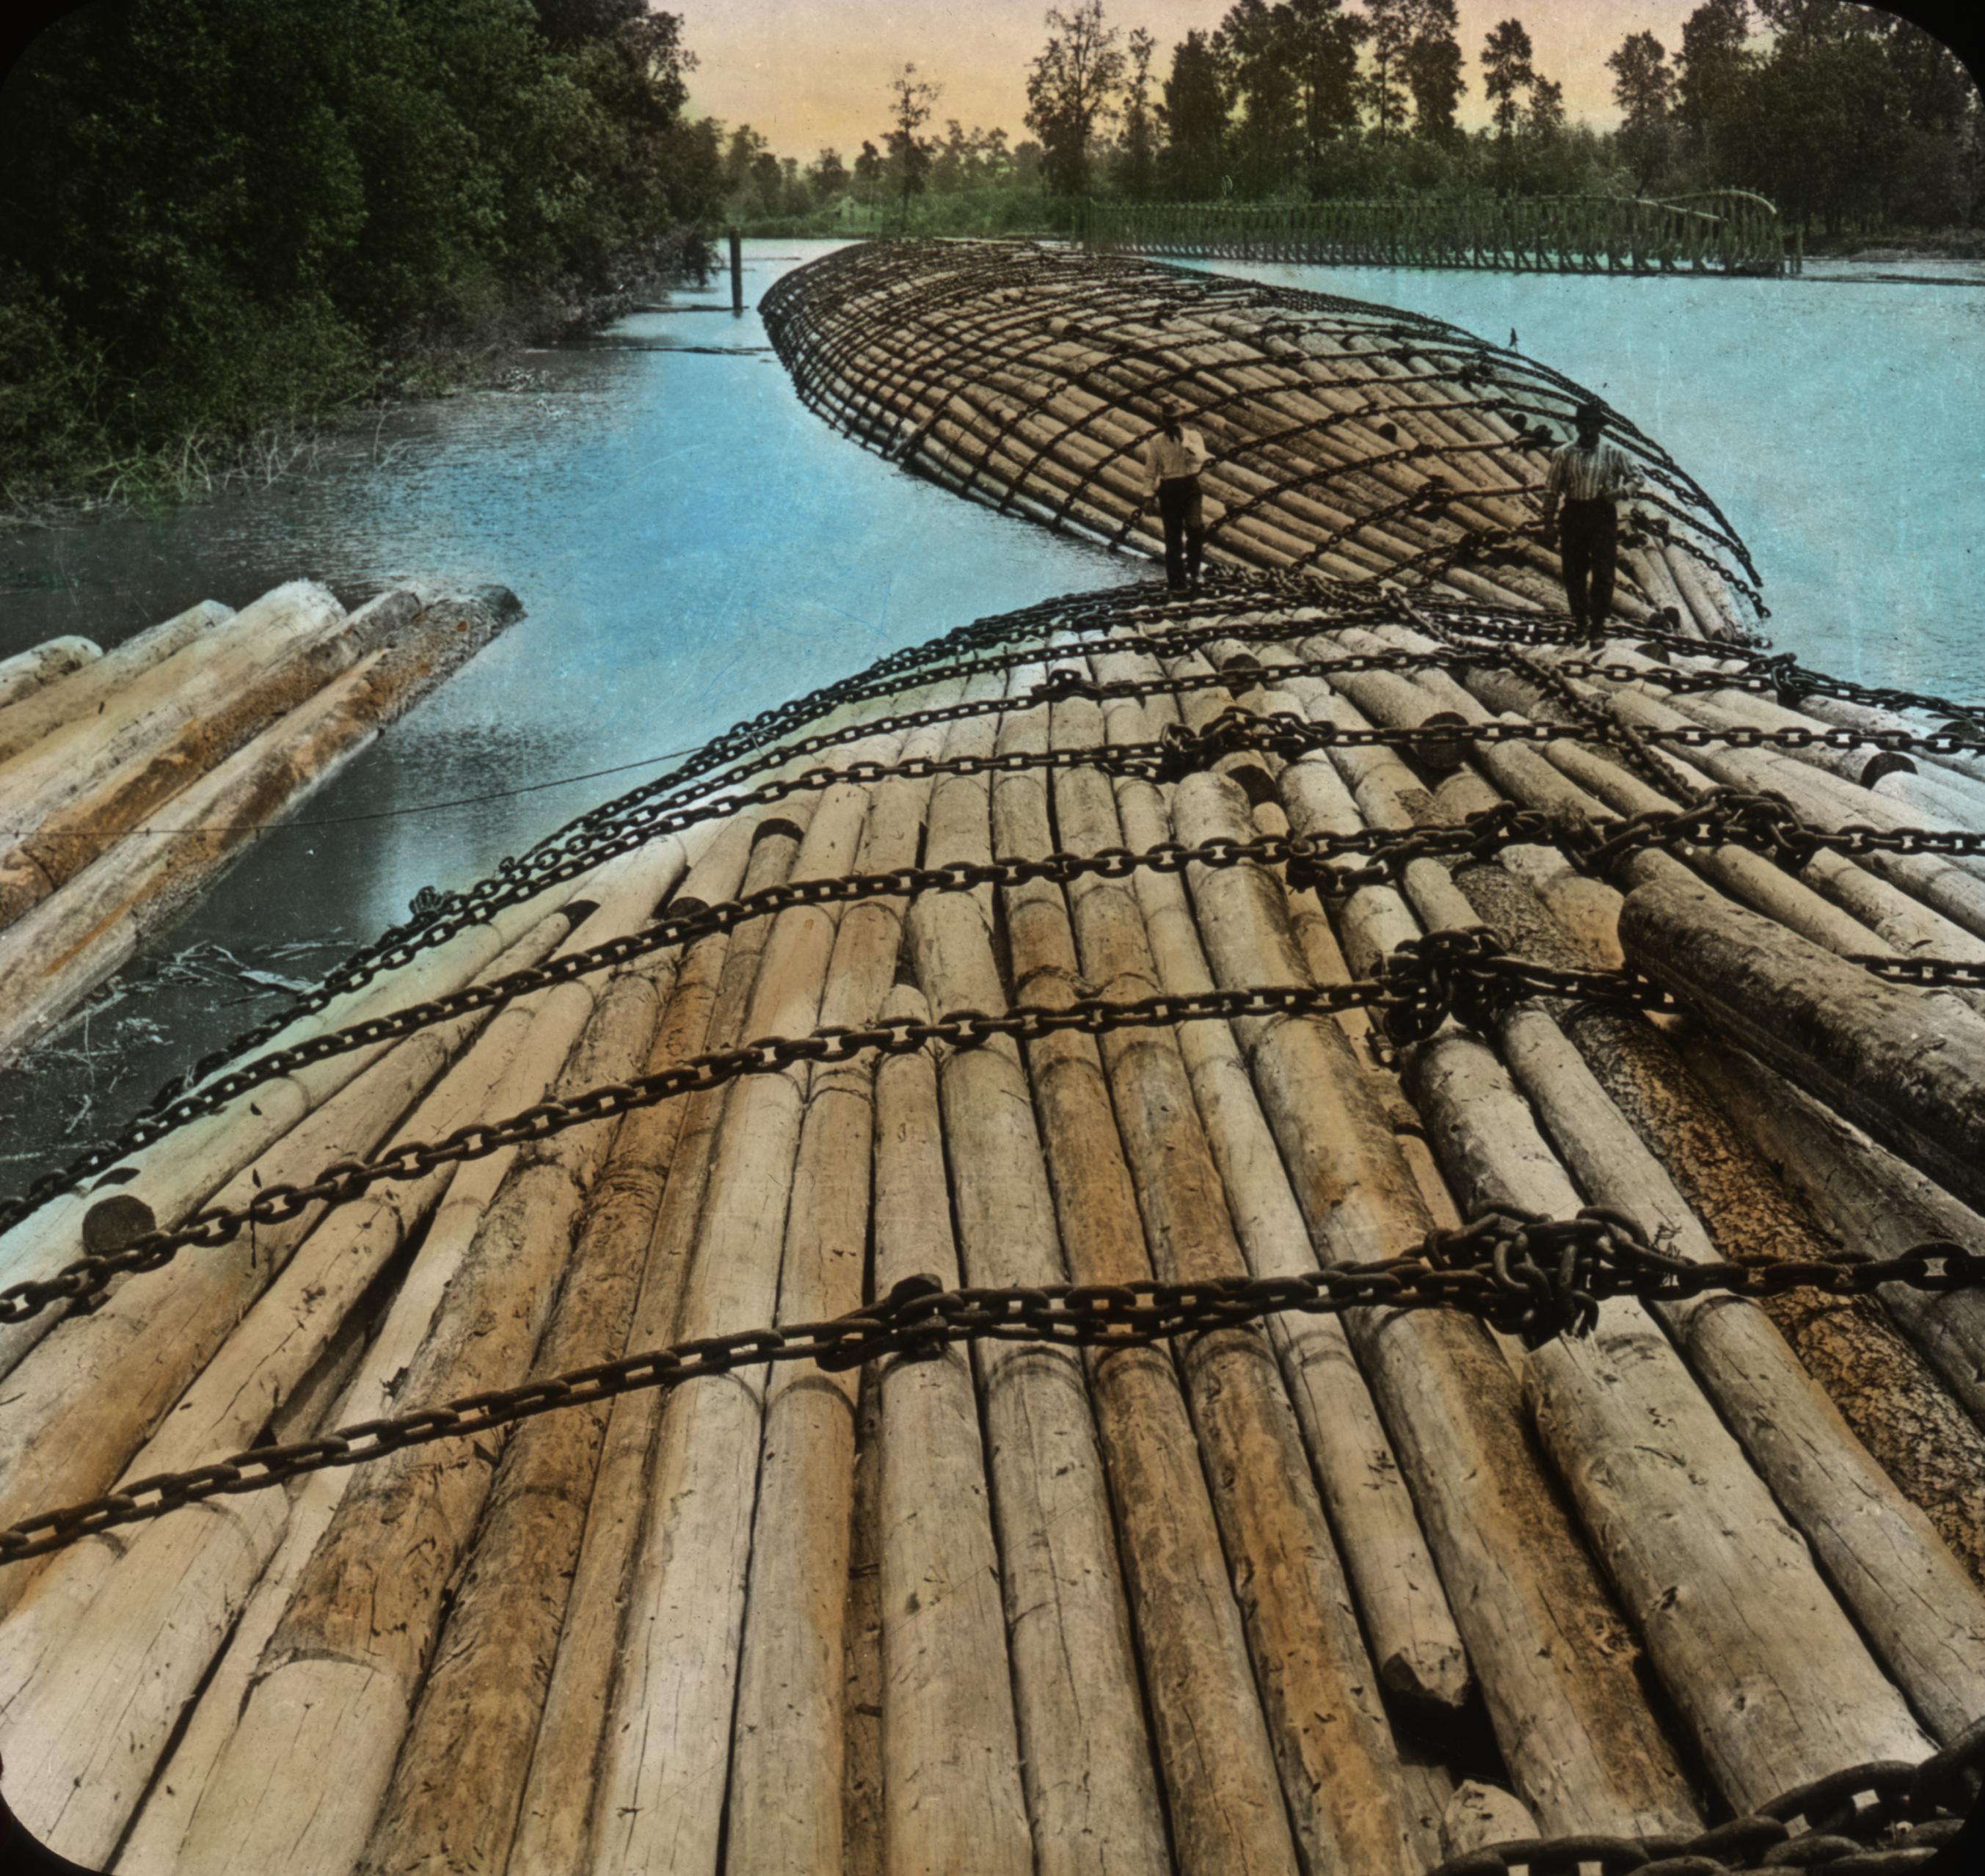 Raft_of_Logs,_Columbia_River.jpg